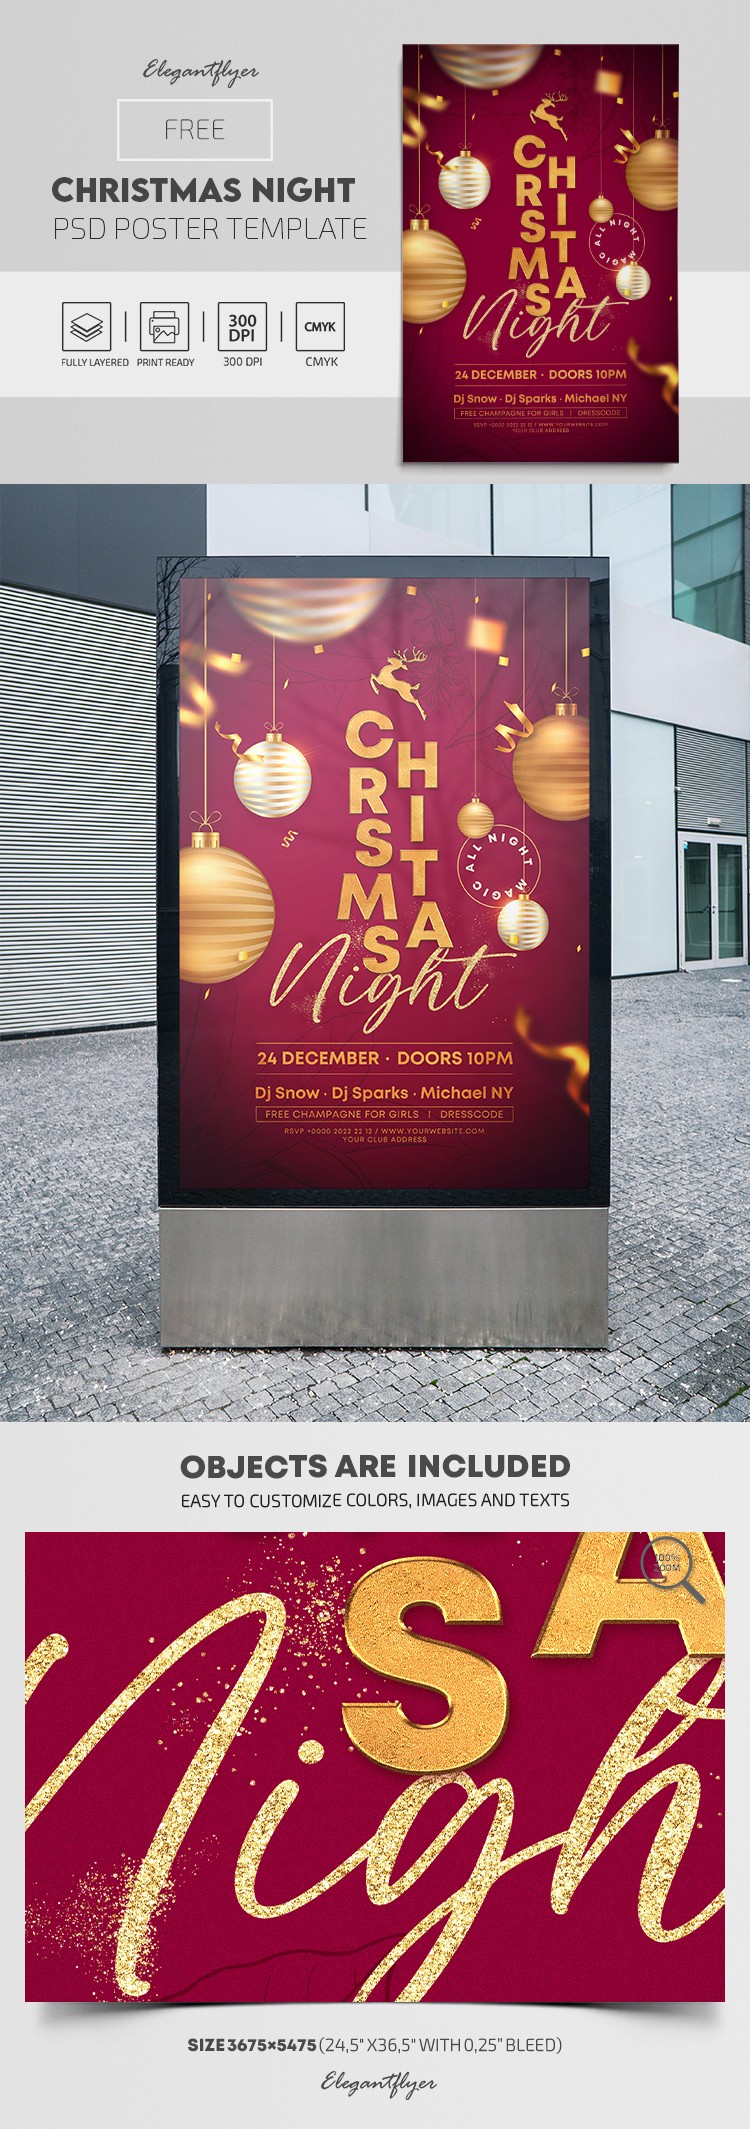 Cartaz da Noite de Natal by ElegantFlyer